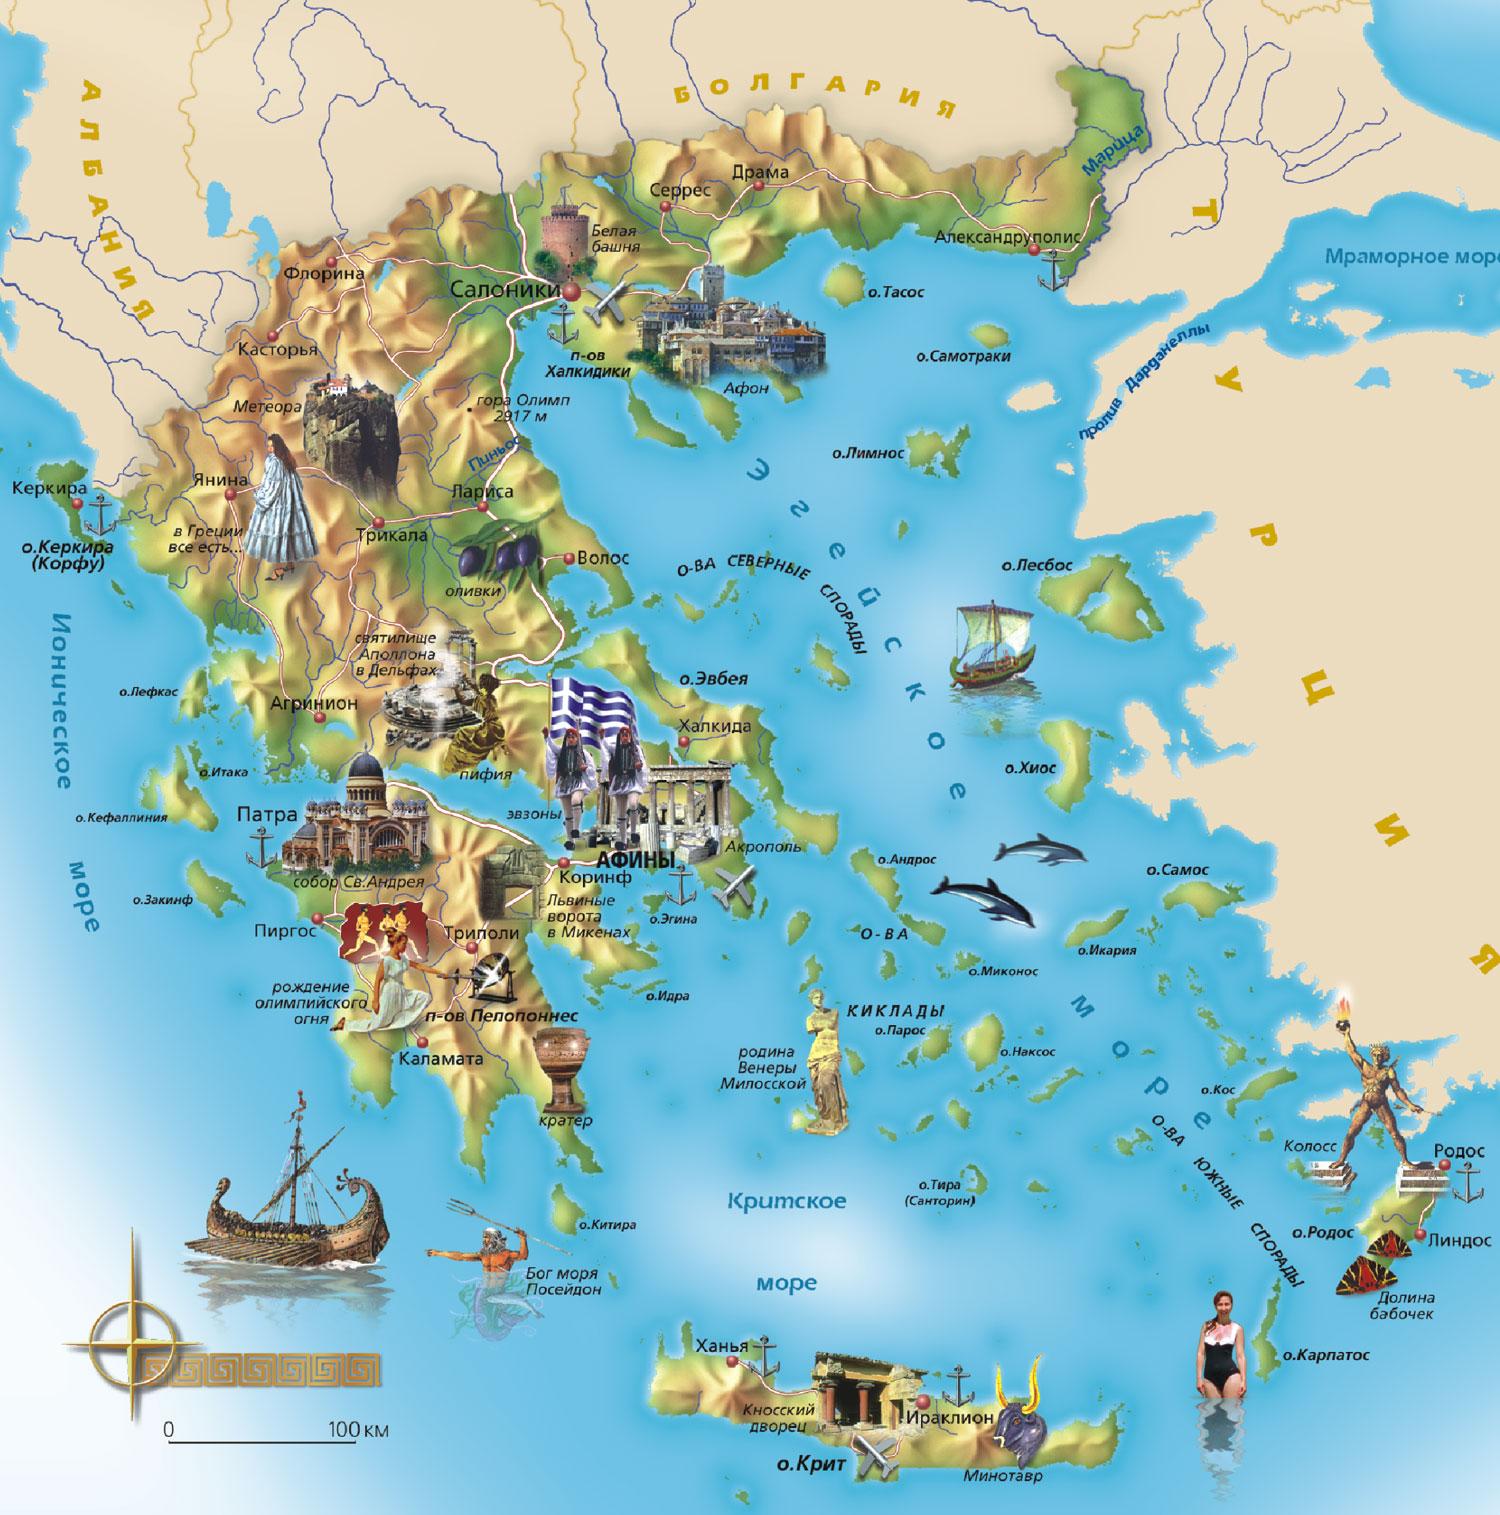 greece tourism department